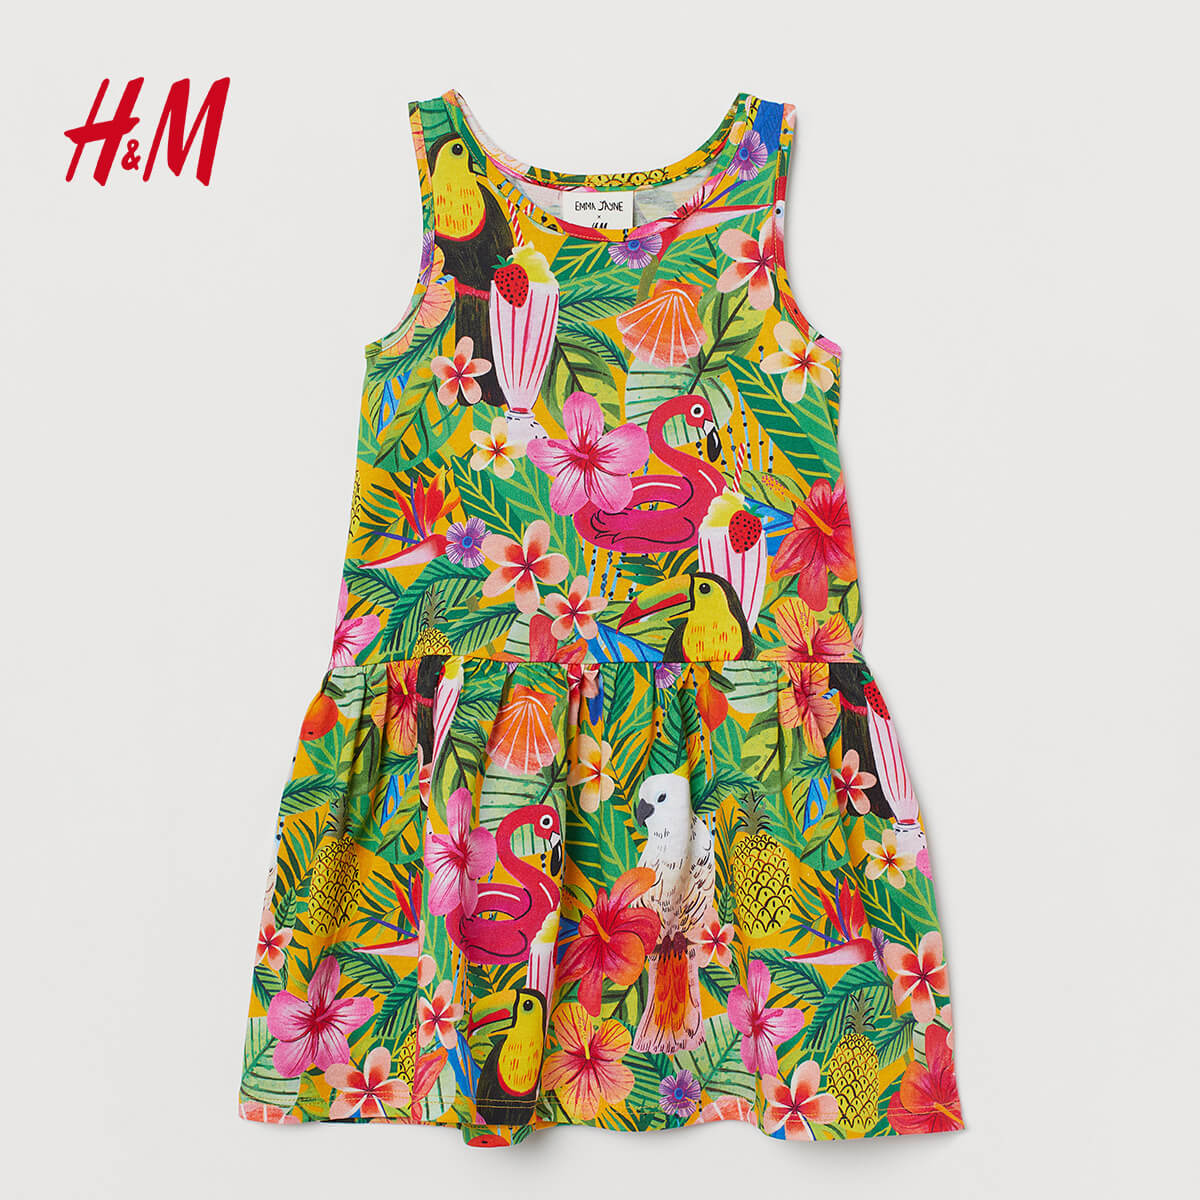 H&m New Tags Girls Emma Jayne Summer Sun Dress 4-5 5-6 Years Height 110-116cm 